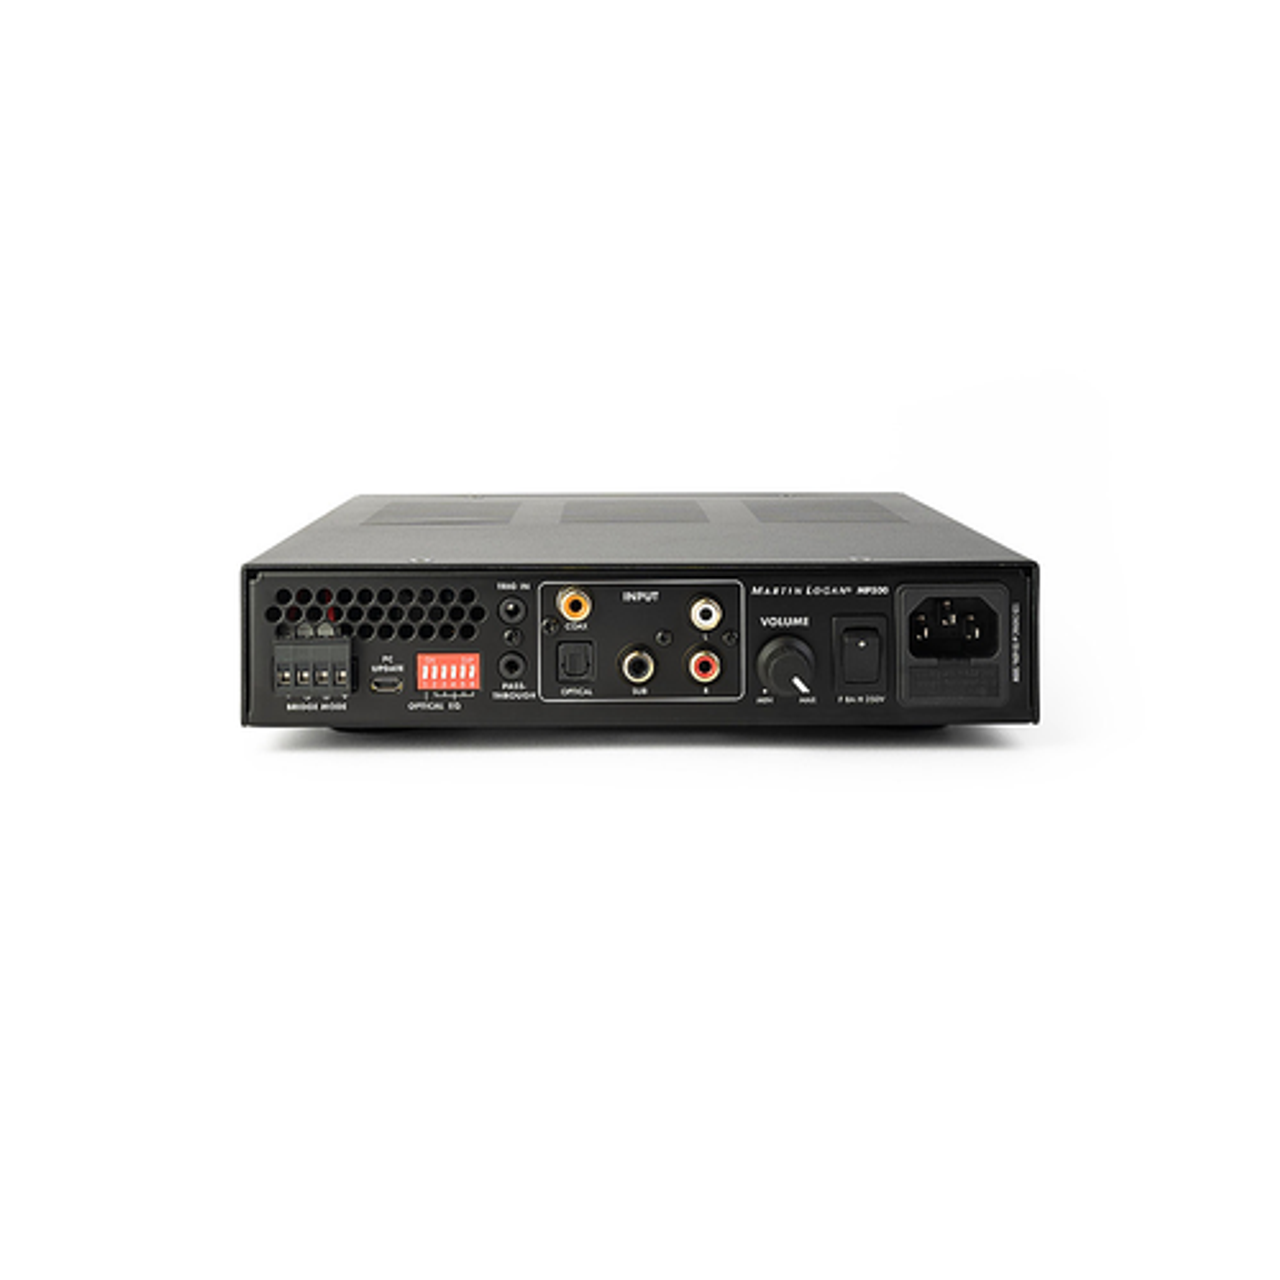 MartinLogan - 500W 2.0-Ch Multi-Purpose Stereo/Bridgeable DSP Power Amplifier - Black